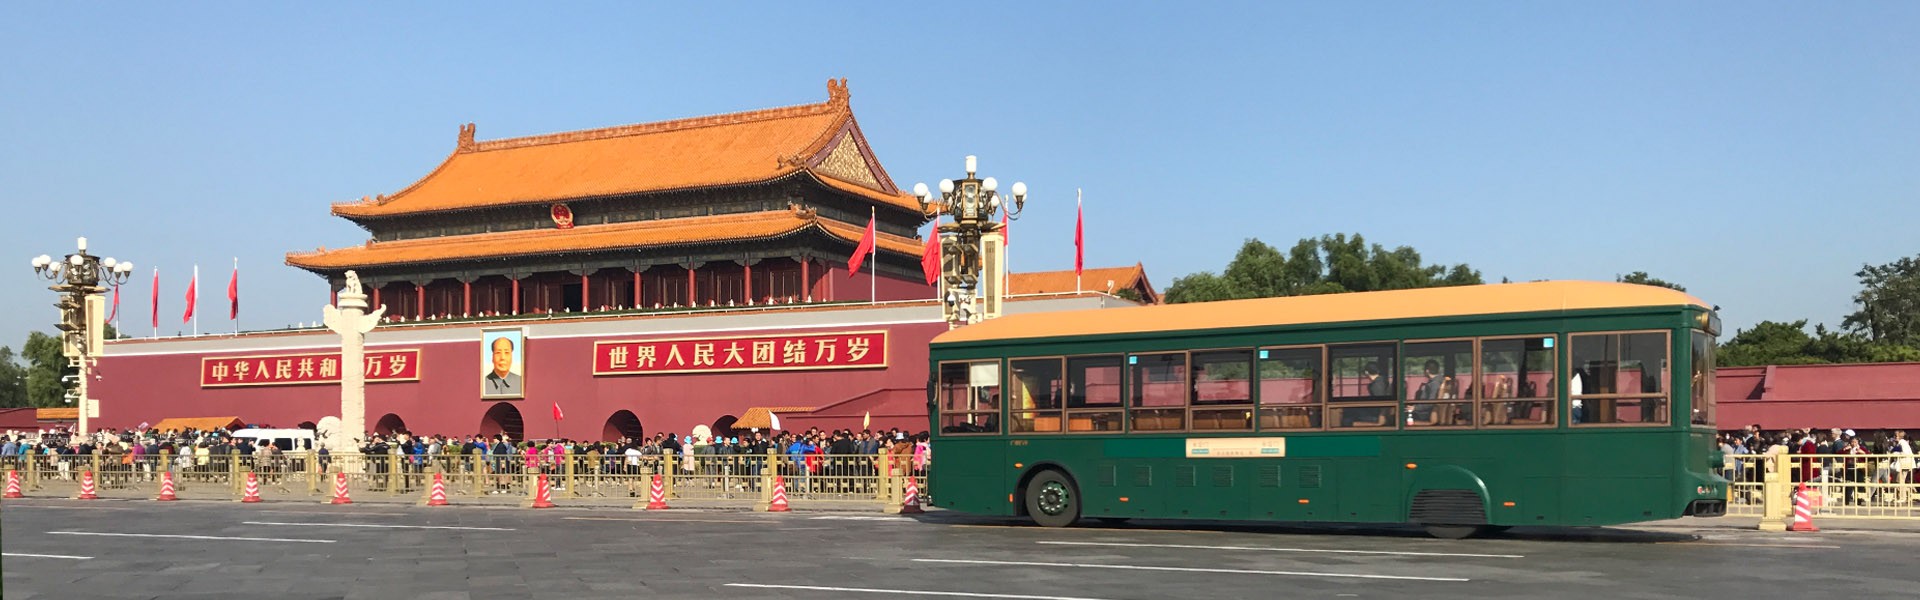 Tiananmen'1920x600'1